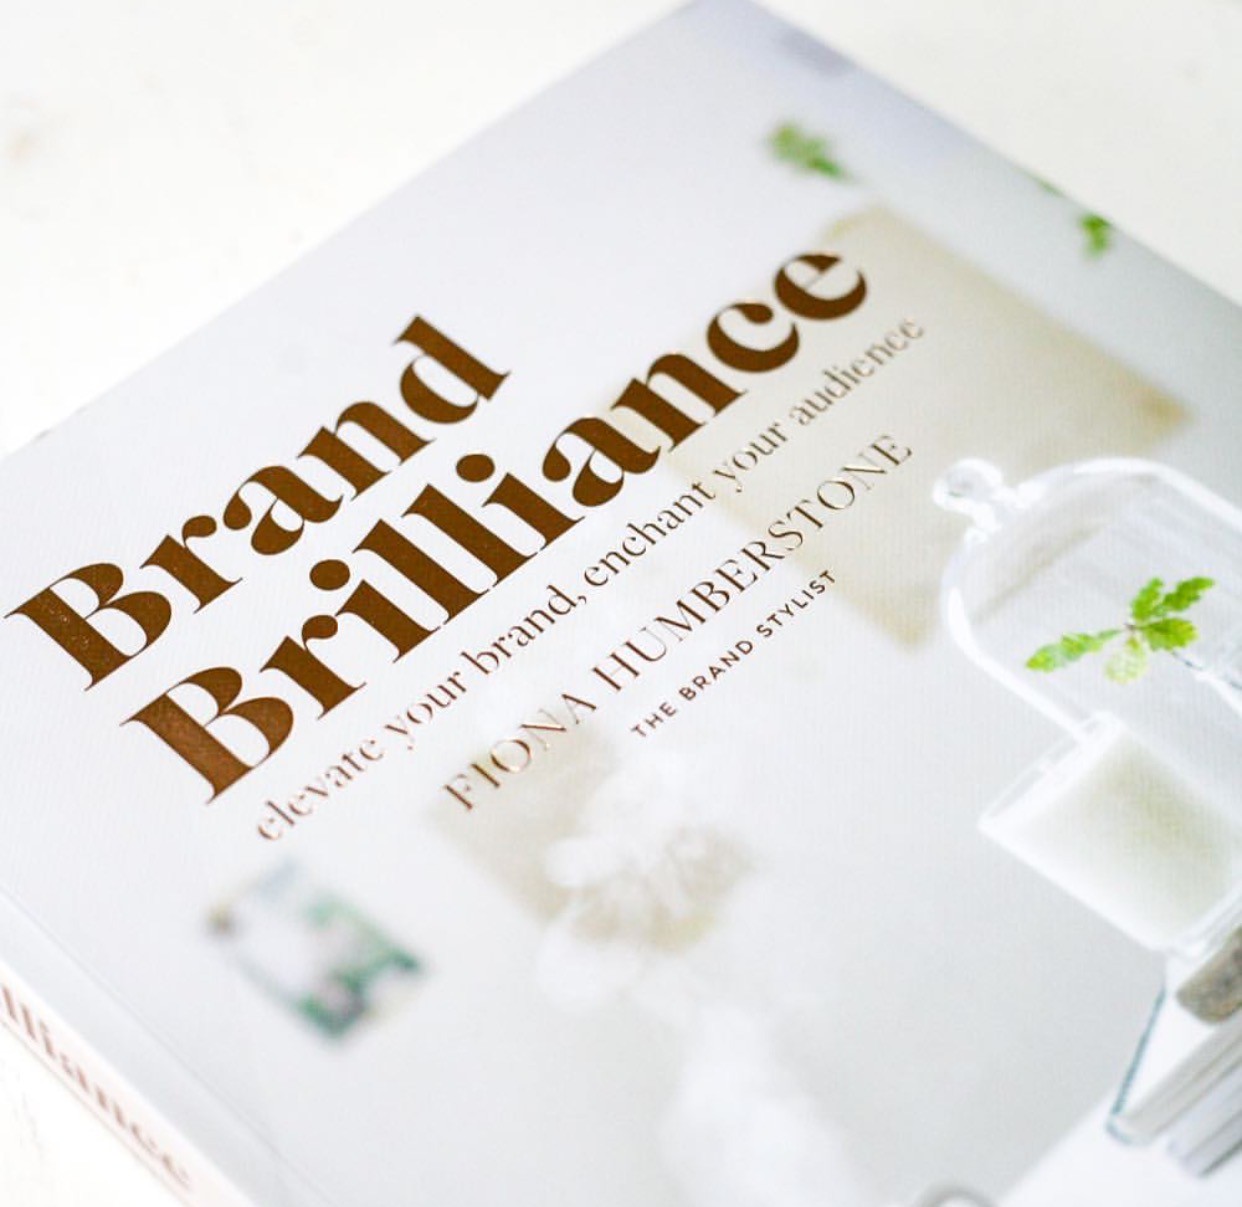 Brand Brilliance Book